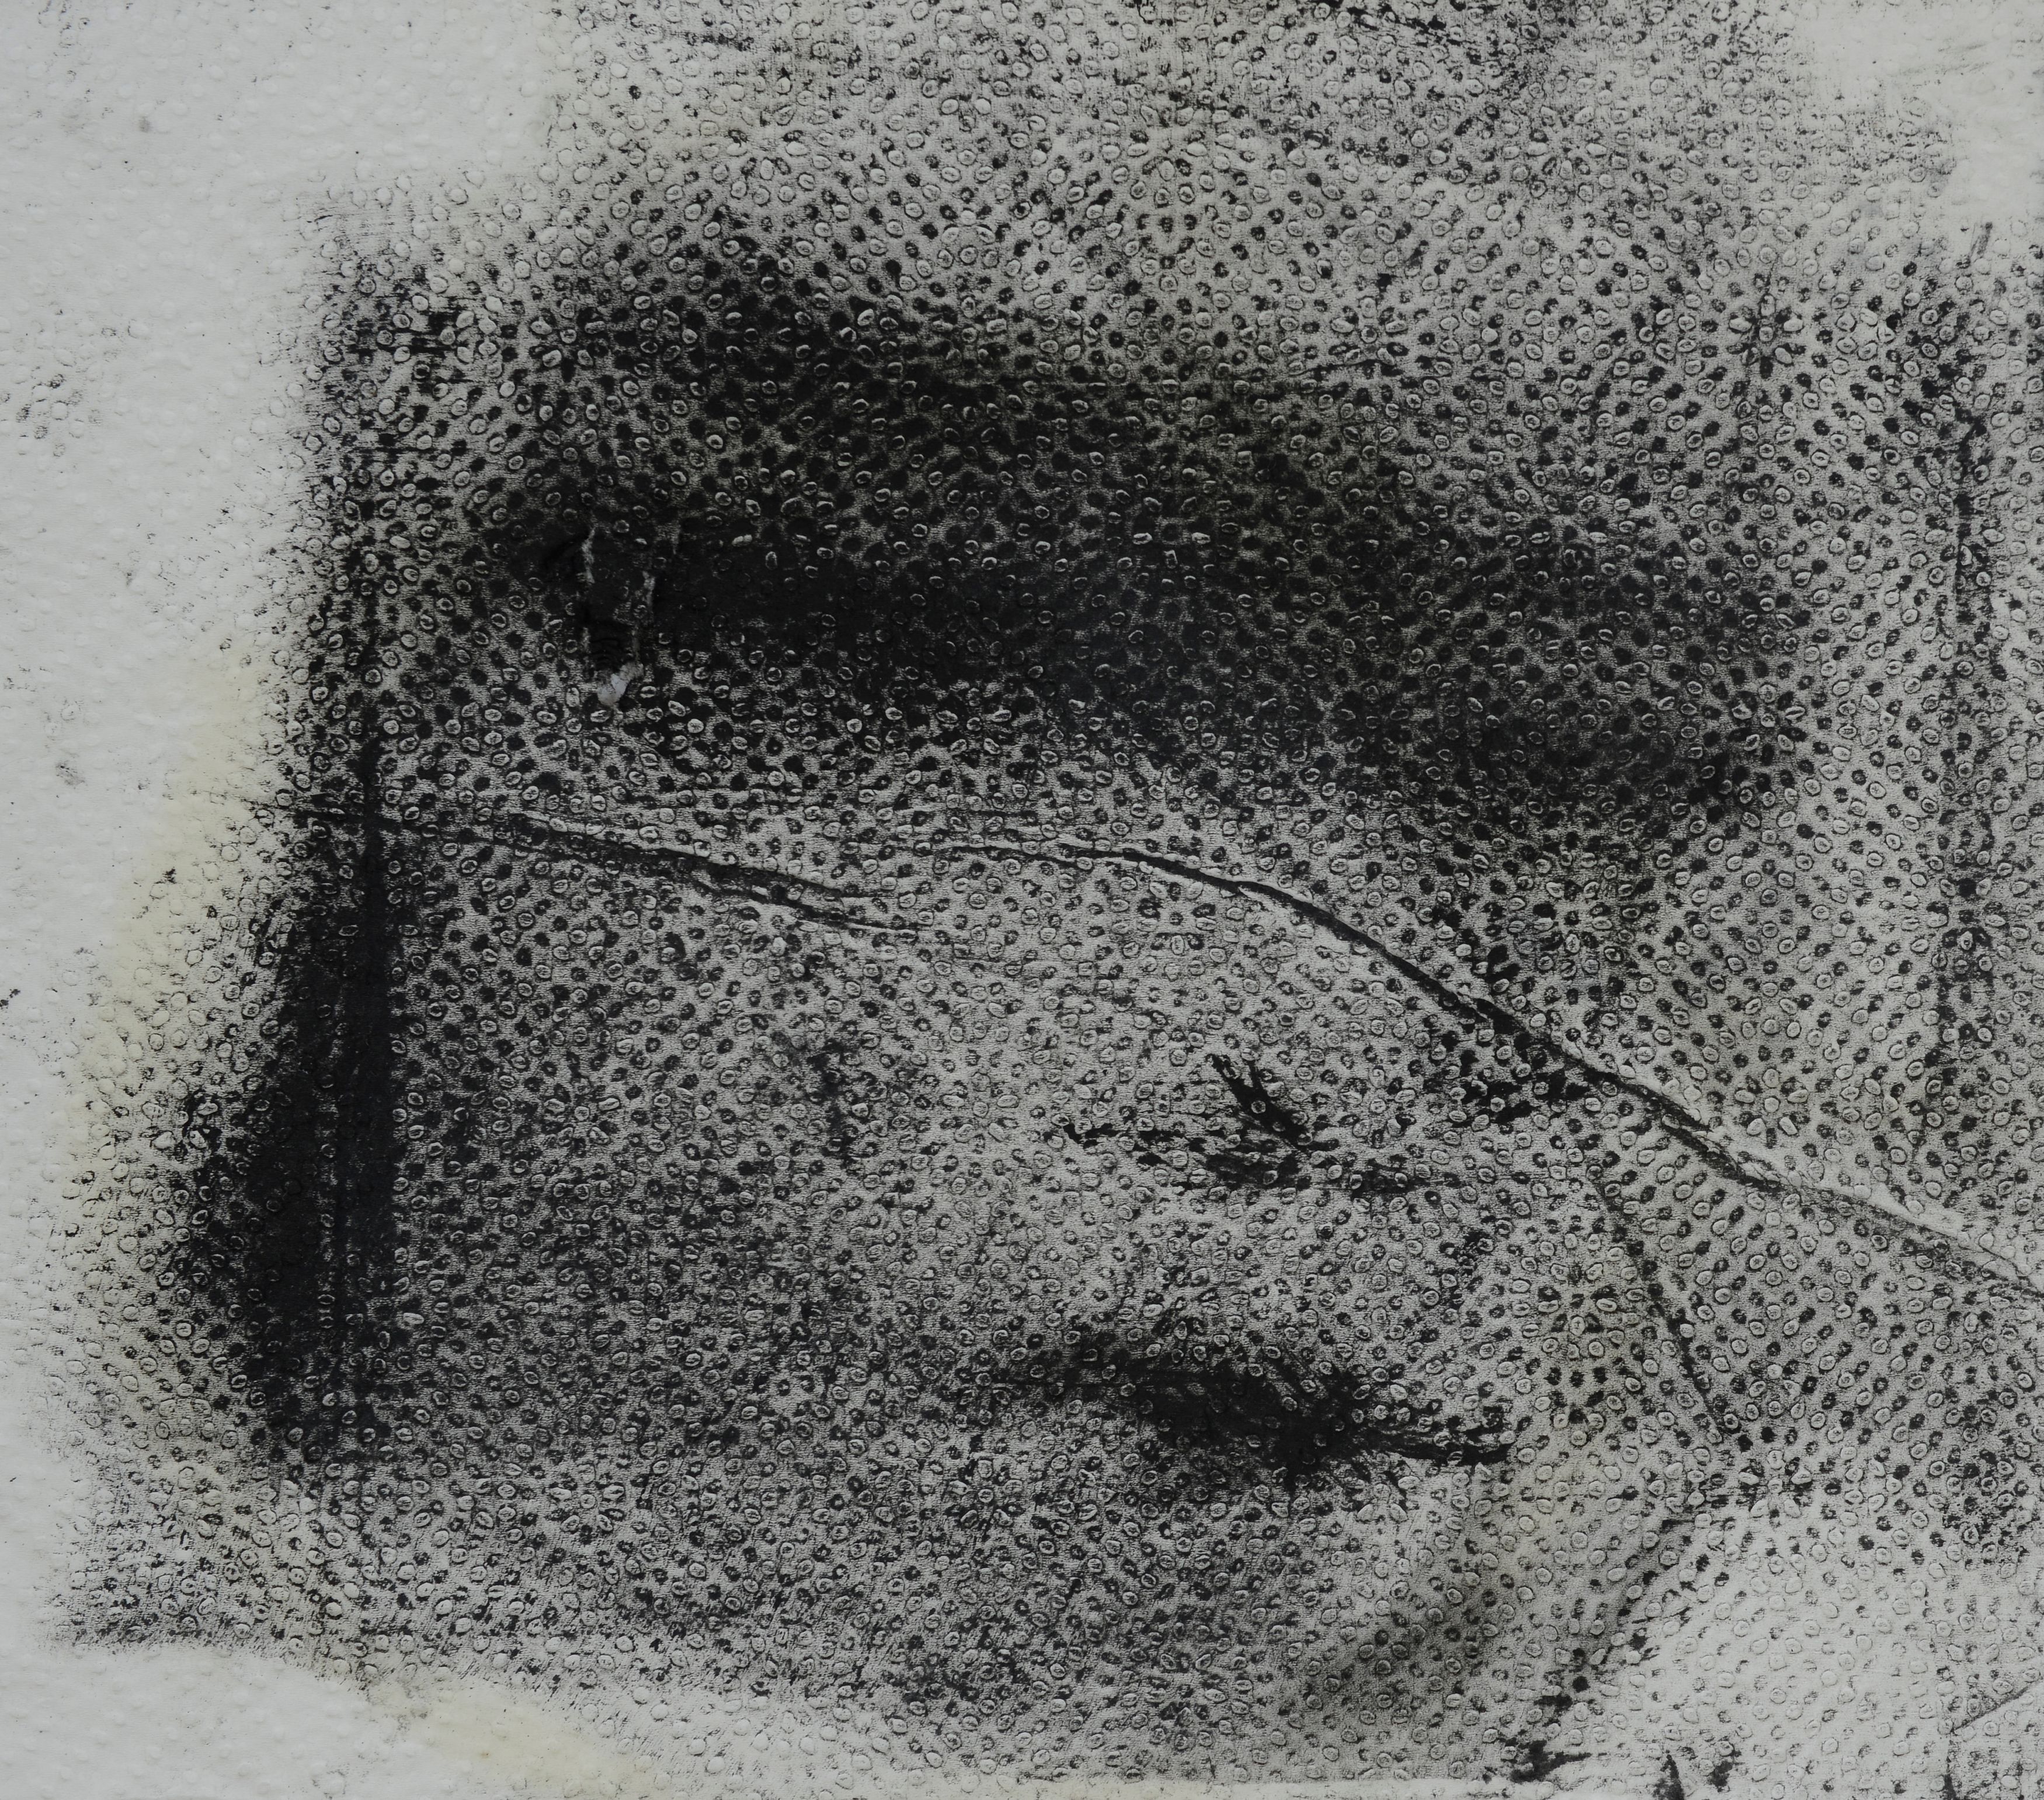 Rafal Bujnowski, Dirty Towel, 2019, oil on paper, 10 1/4 x 9 in. (26.04 x 22.86 cm), RB_FP4170